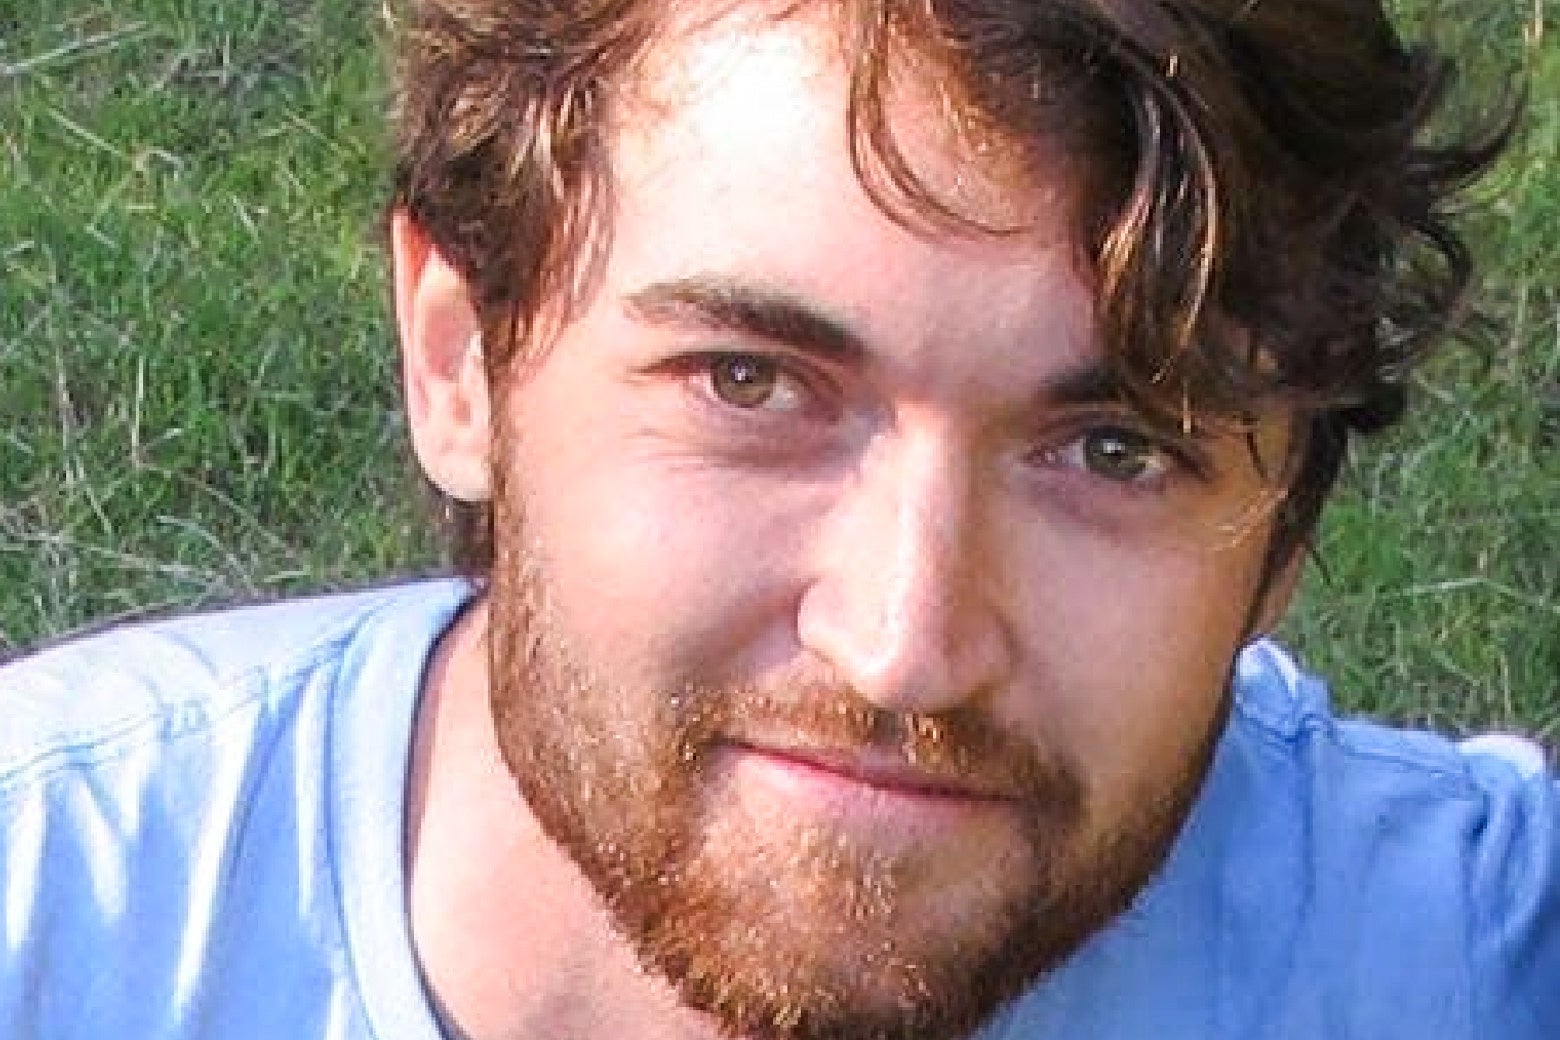 Ross Ulbricht in a blue shirt, bearded, smiling.